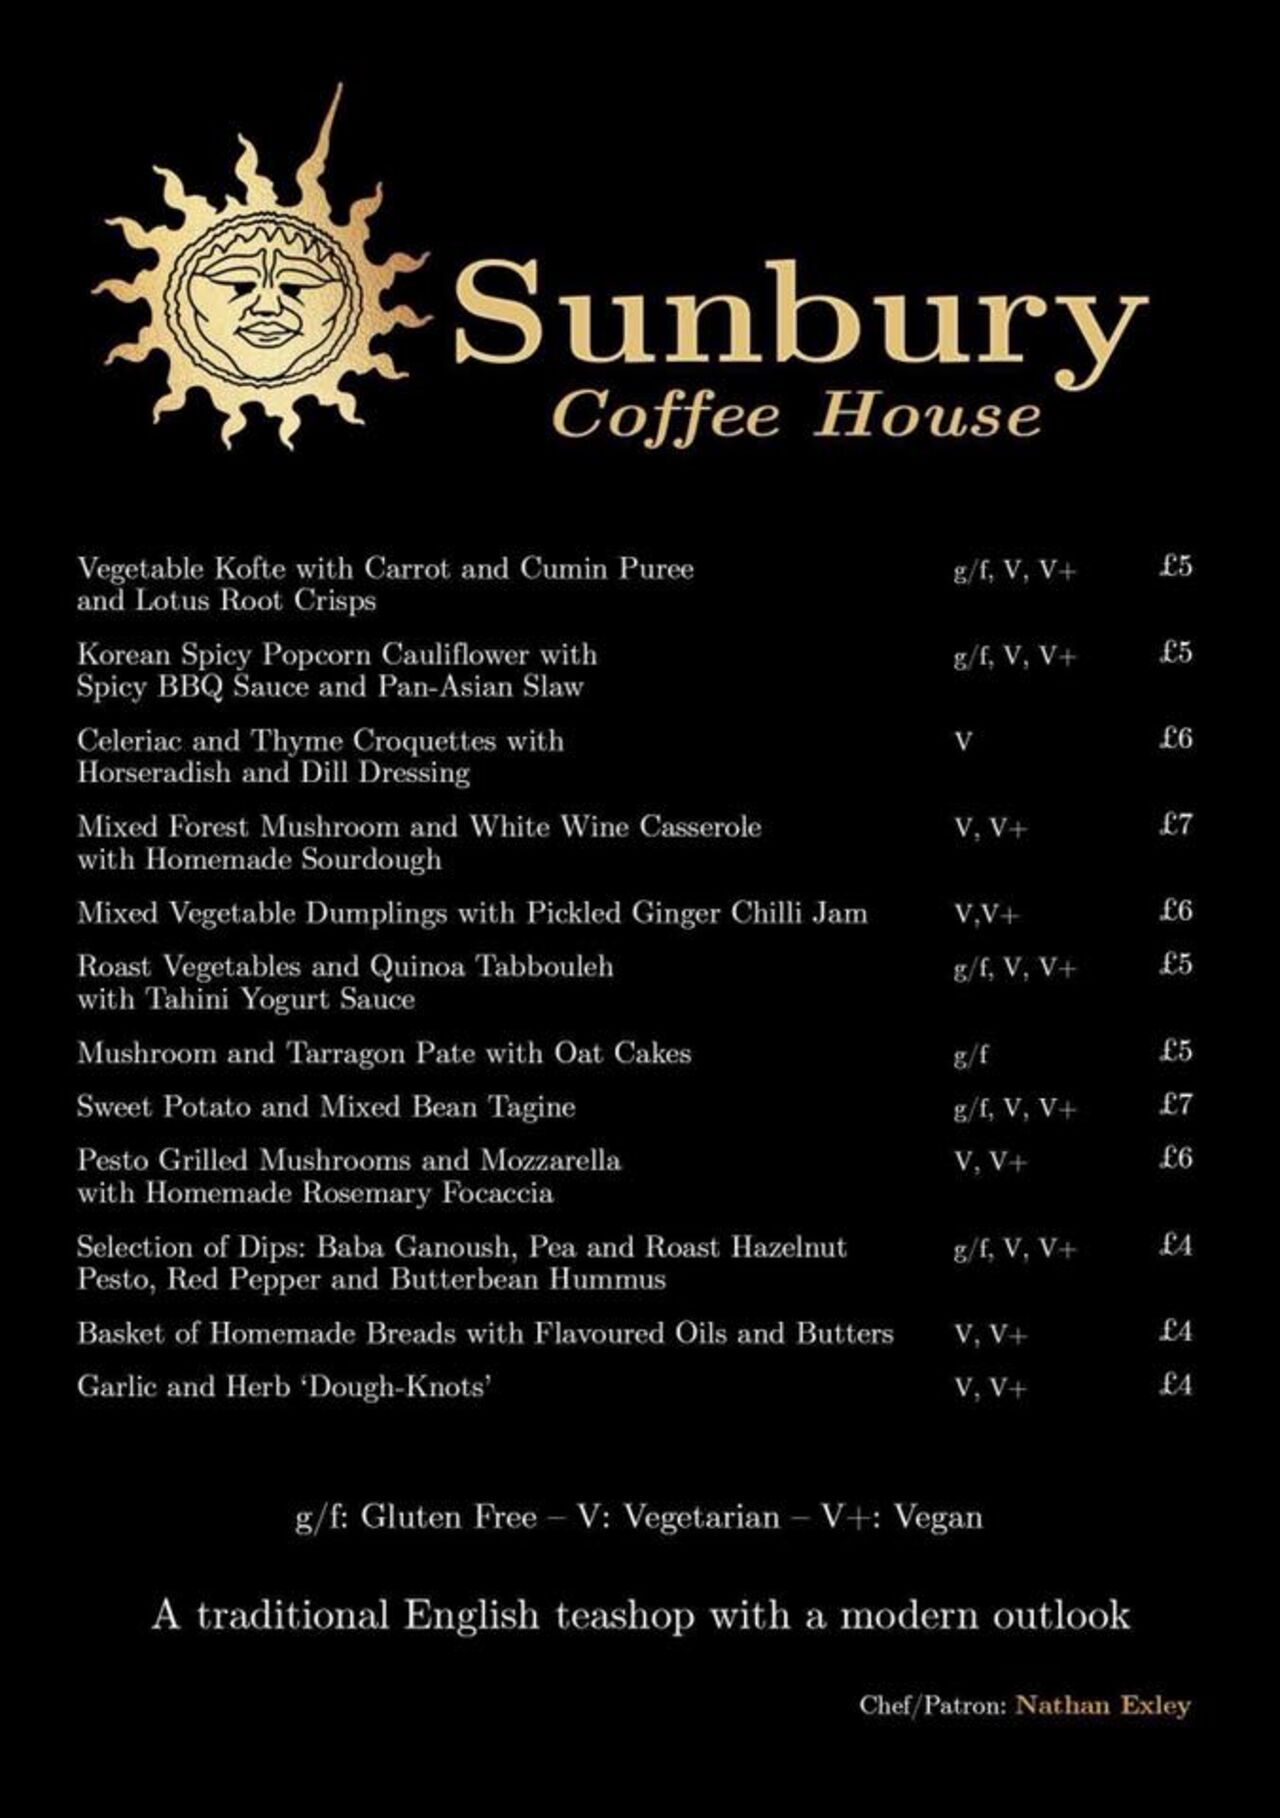 A photo of Sunbury Coffee House